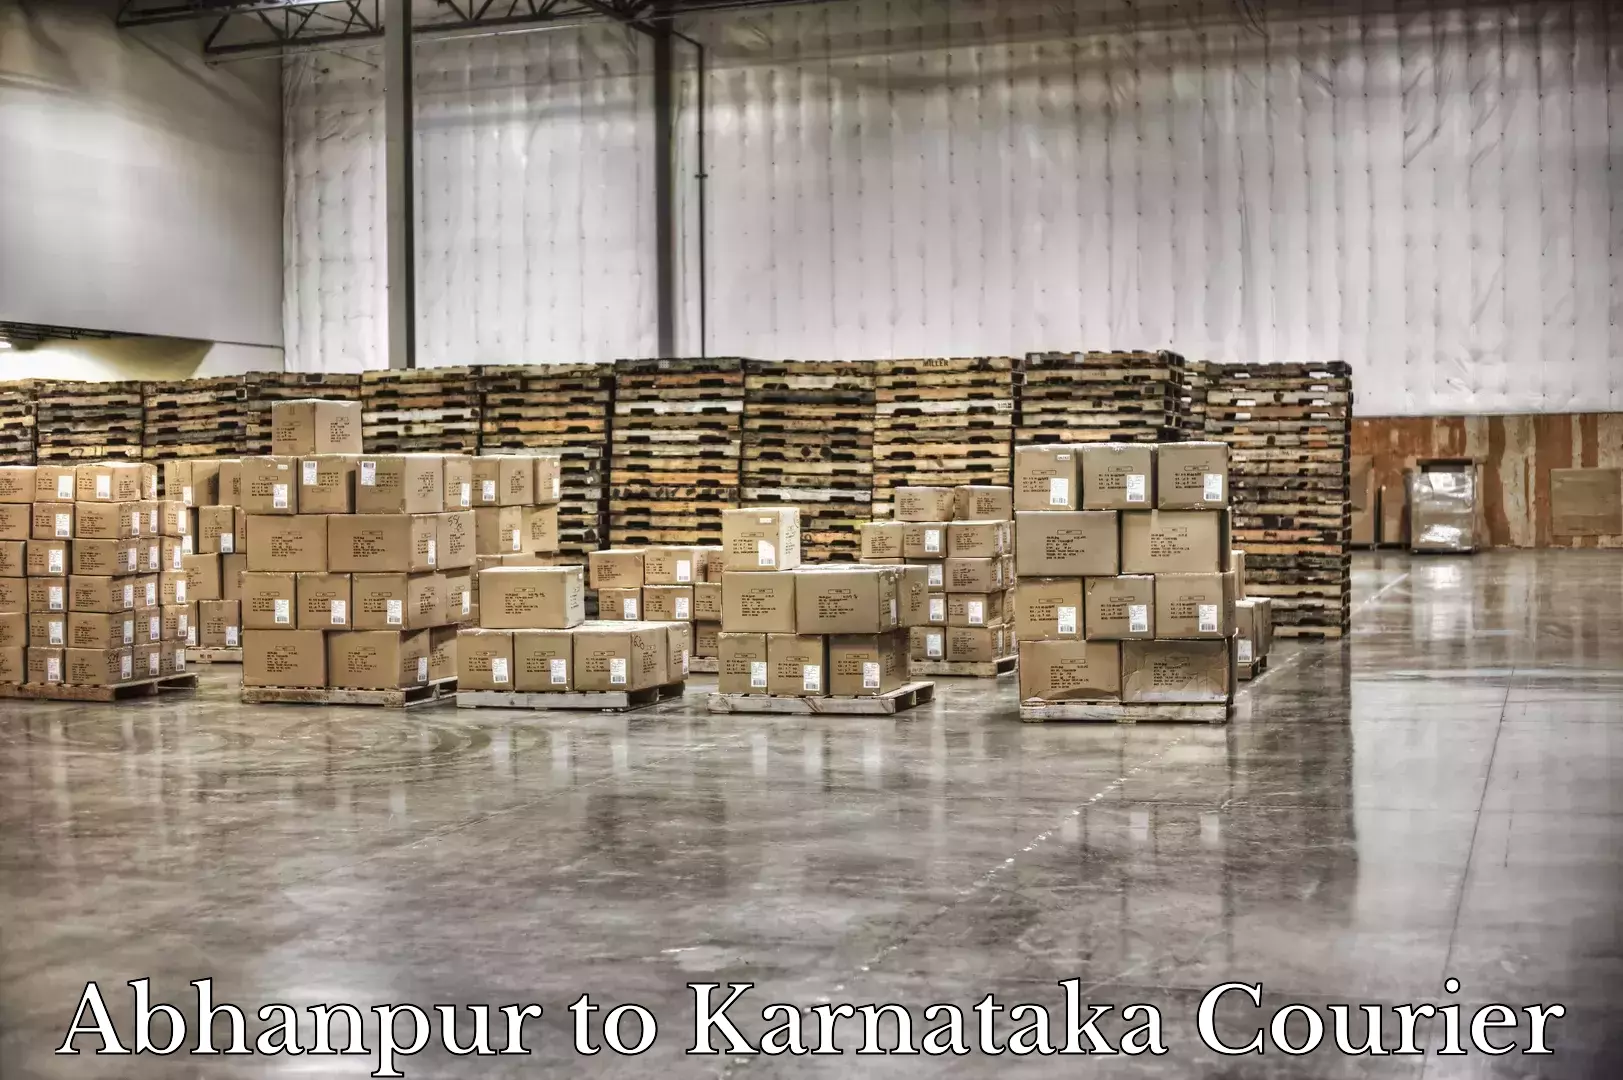 Baggage relocation service Abhanpur to Kanakapura